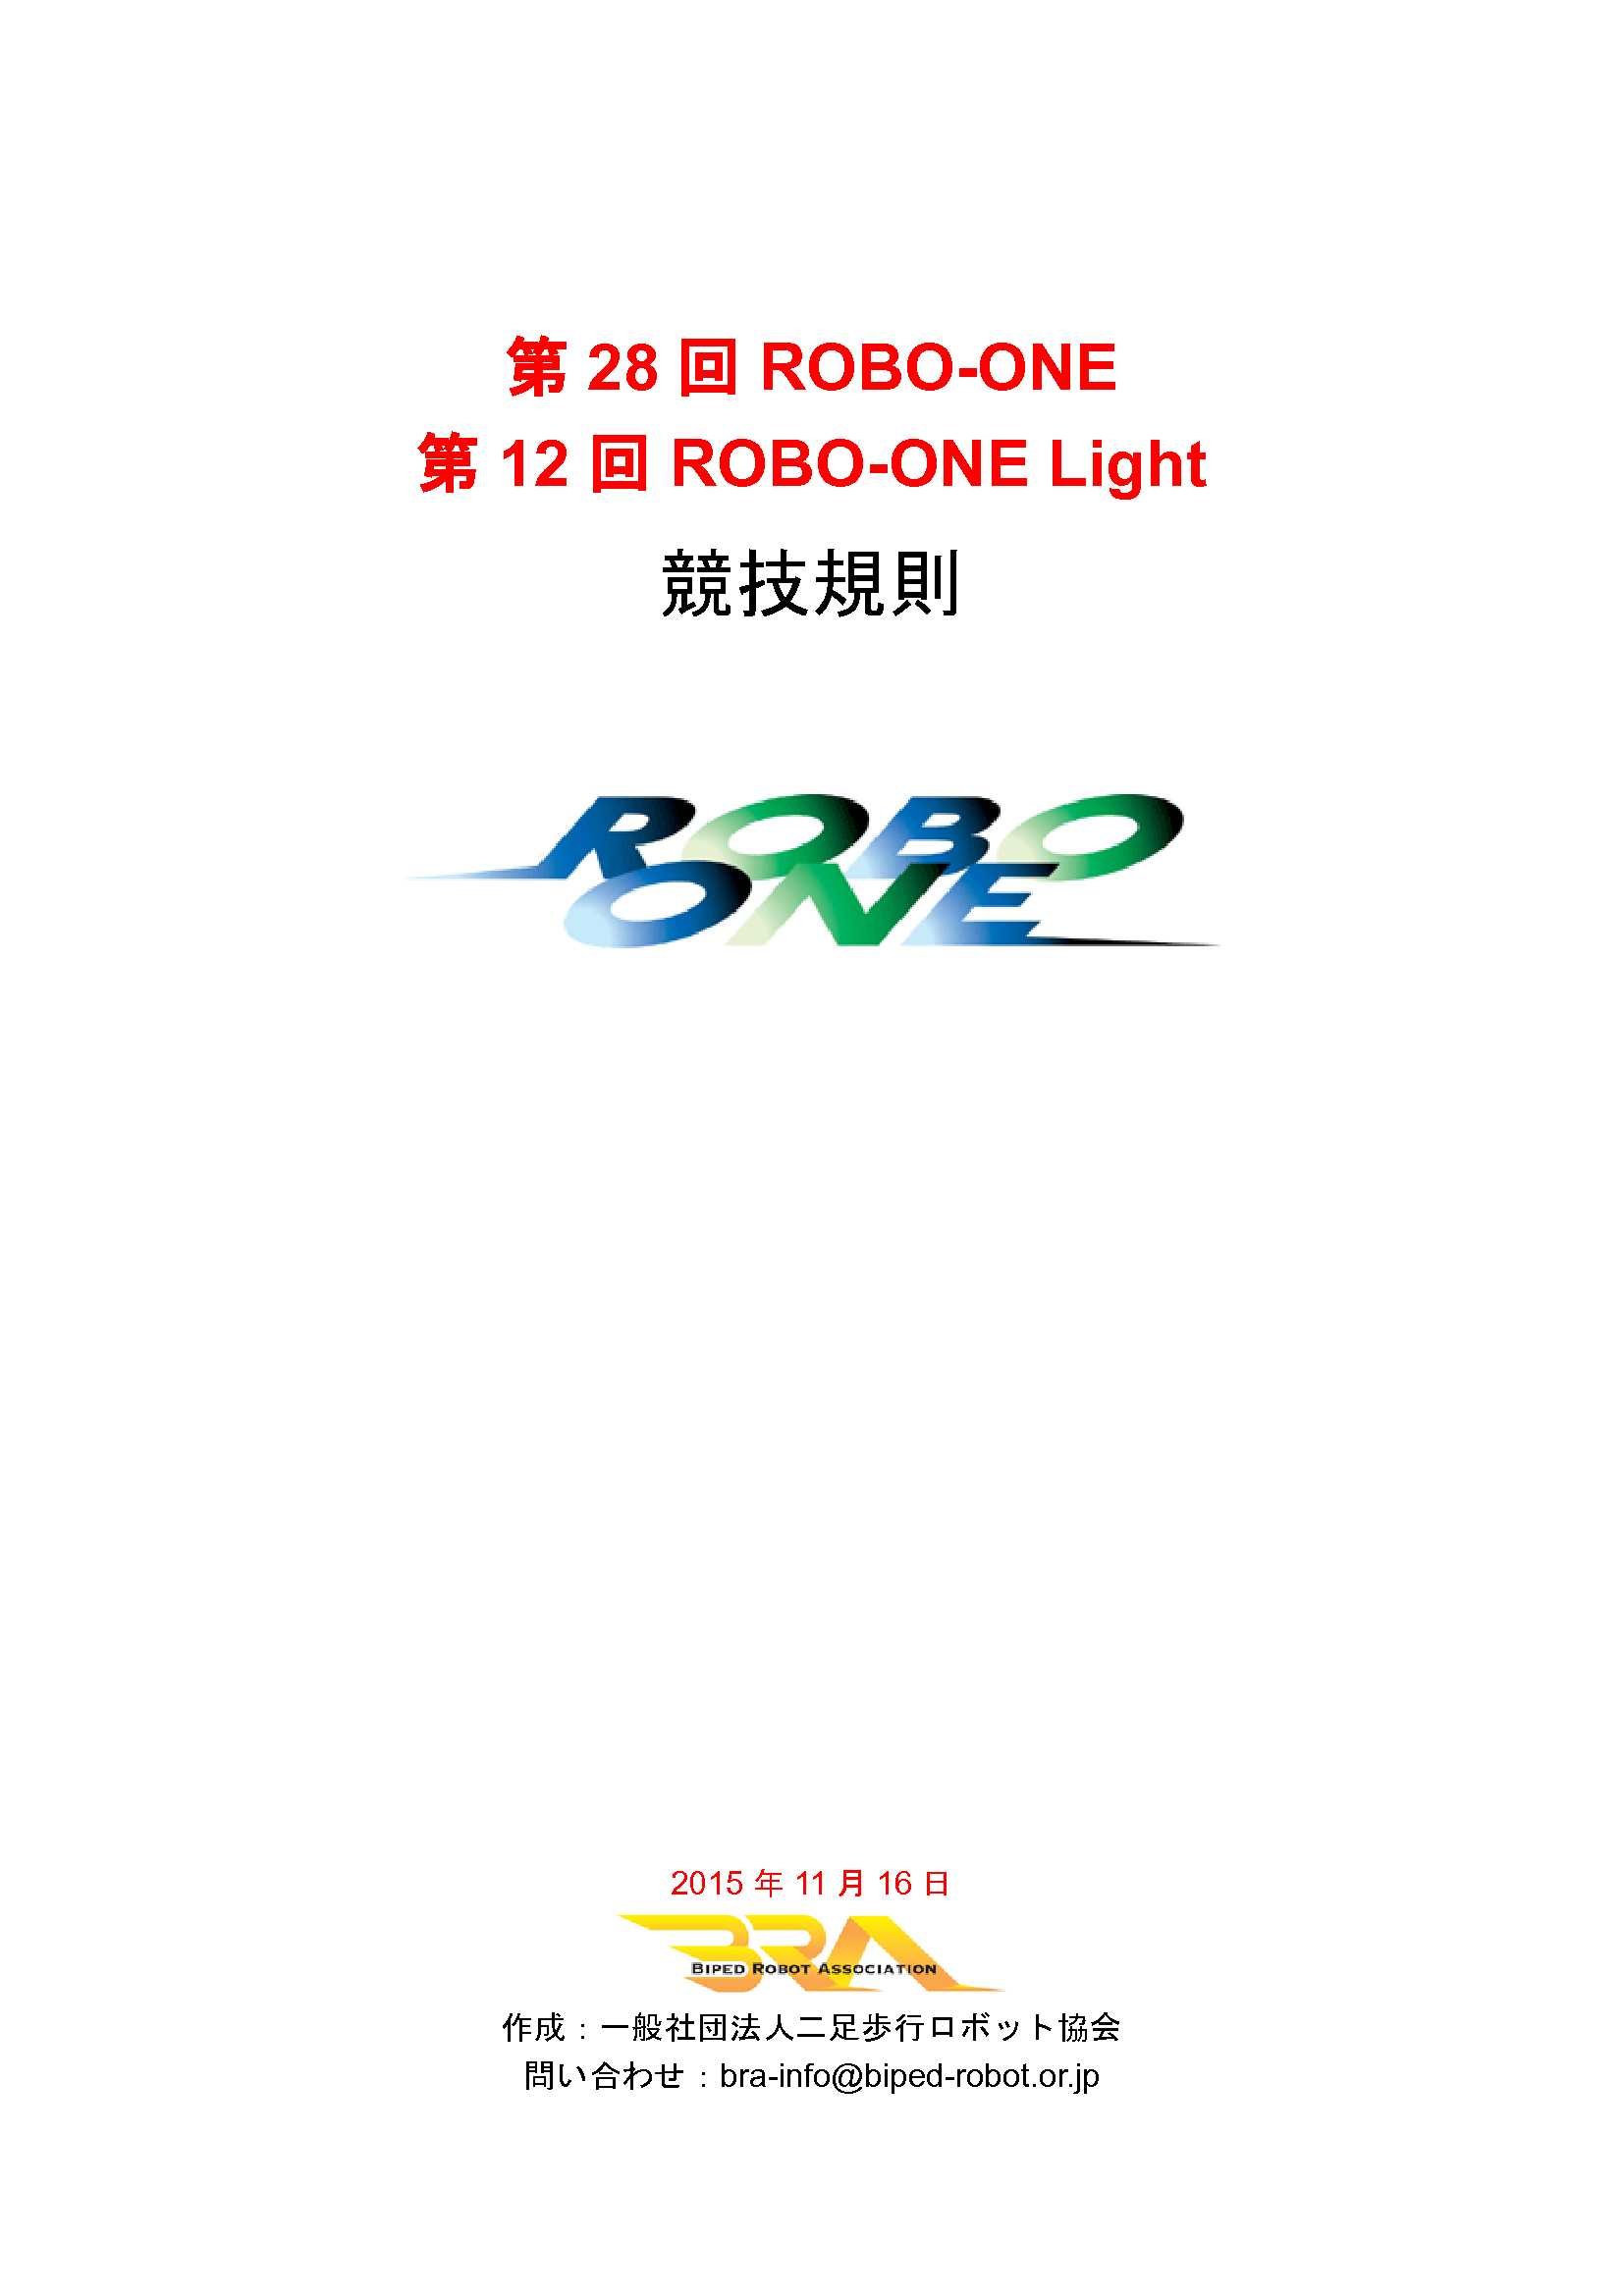 Robo-One & Robo-One Light 경기규정_151116_1.jpg